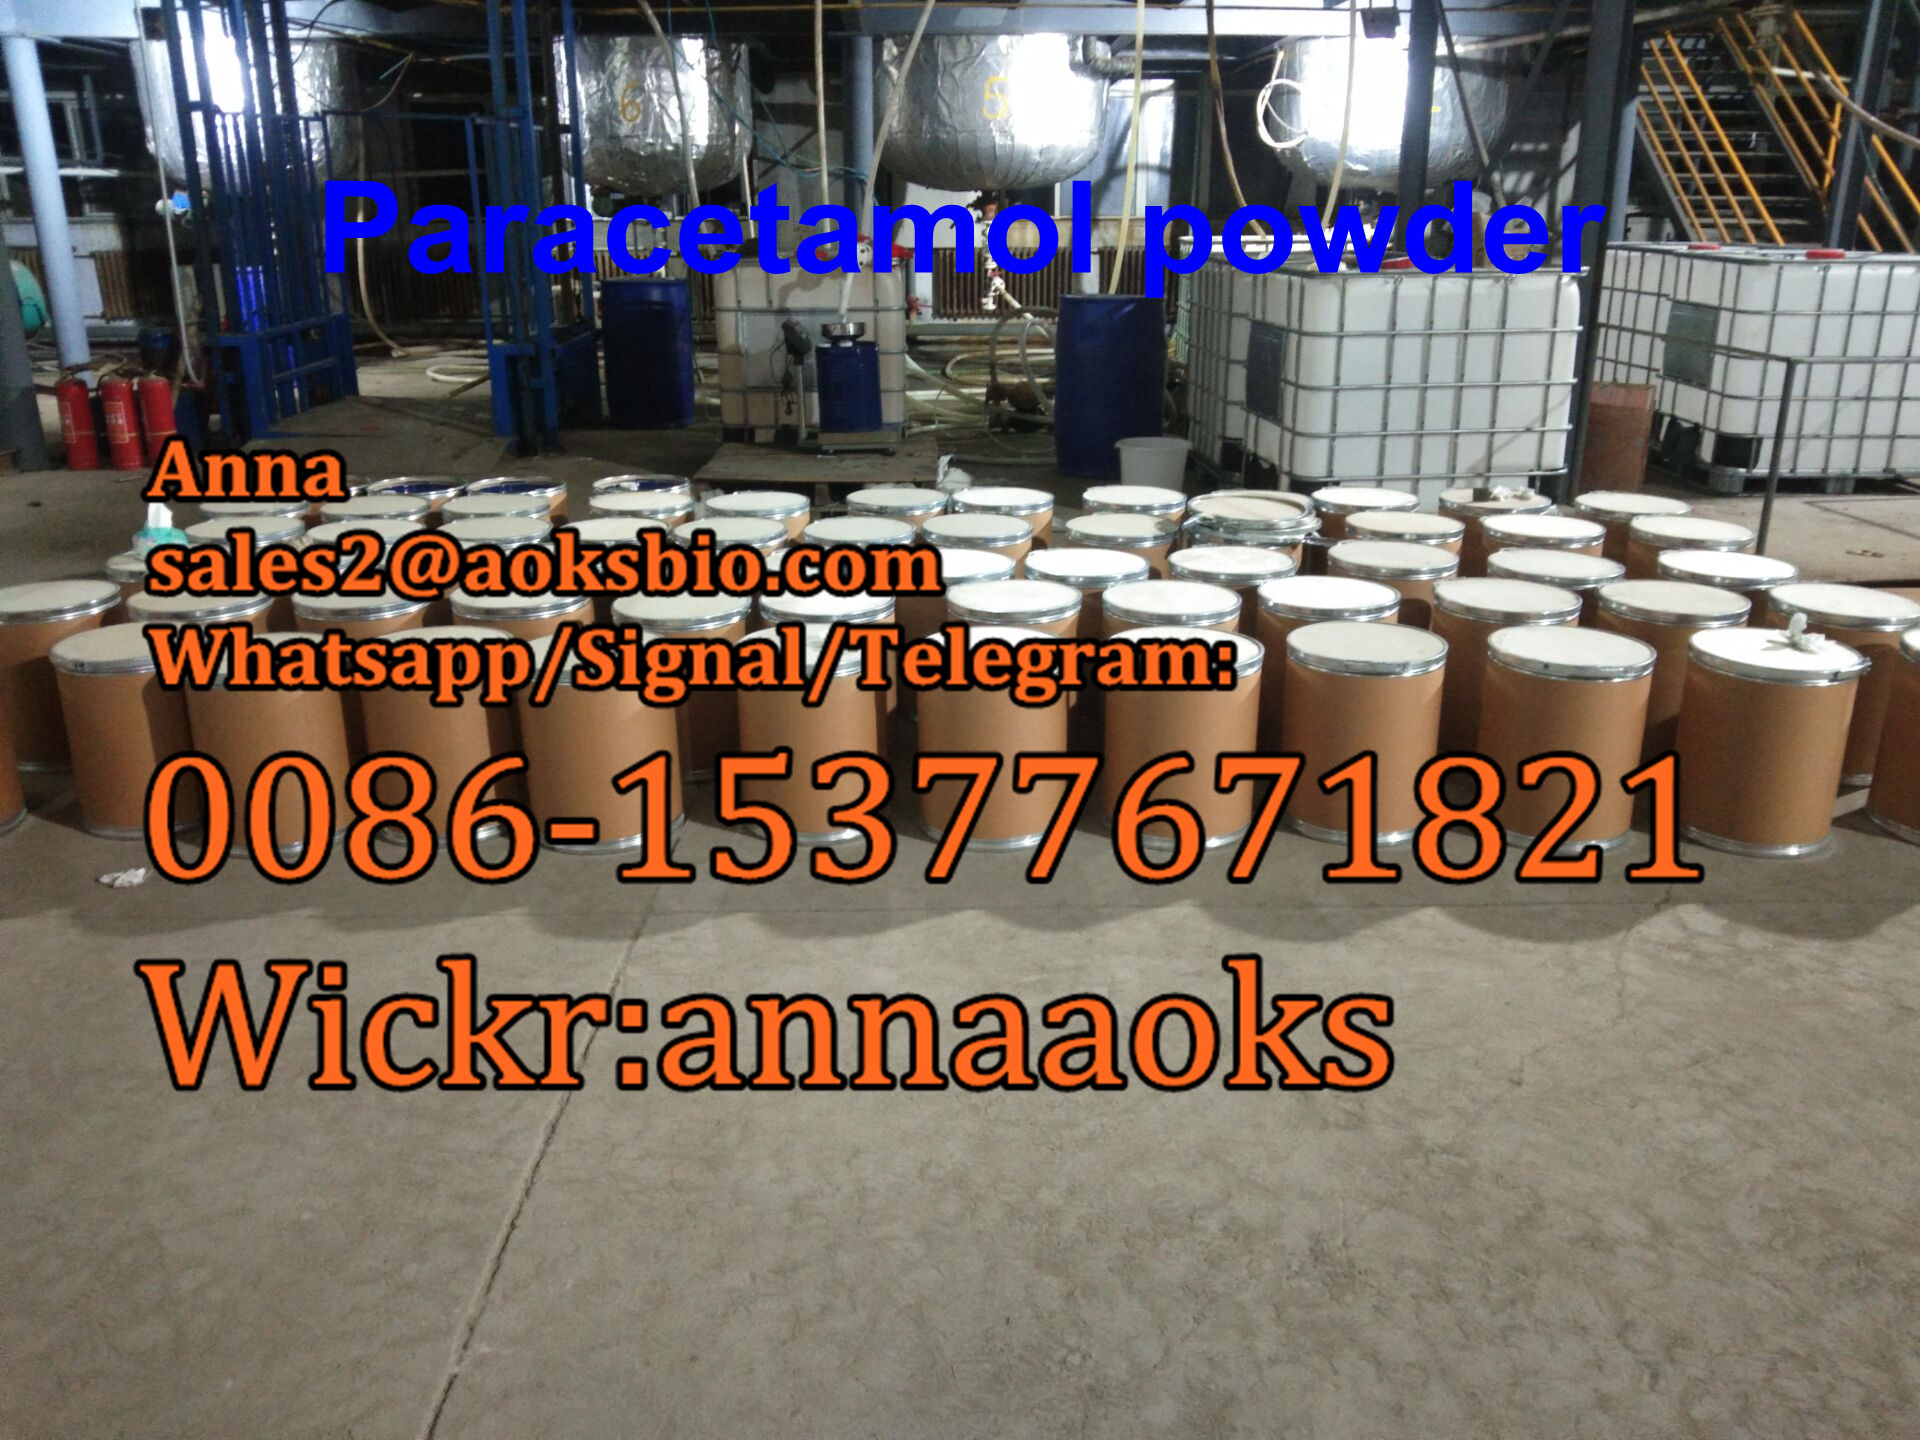 Paracetamol supplier acetaminophen powder cas 103-90-2,sales2@aoksbio.com,Whatsapp:0086-15377671821 в городе Москва, фото 2, стоимость: 50 руб.